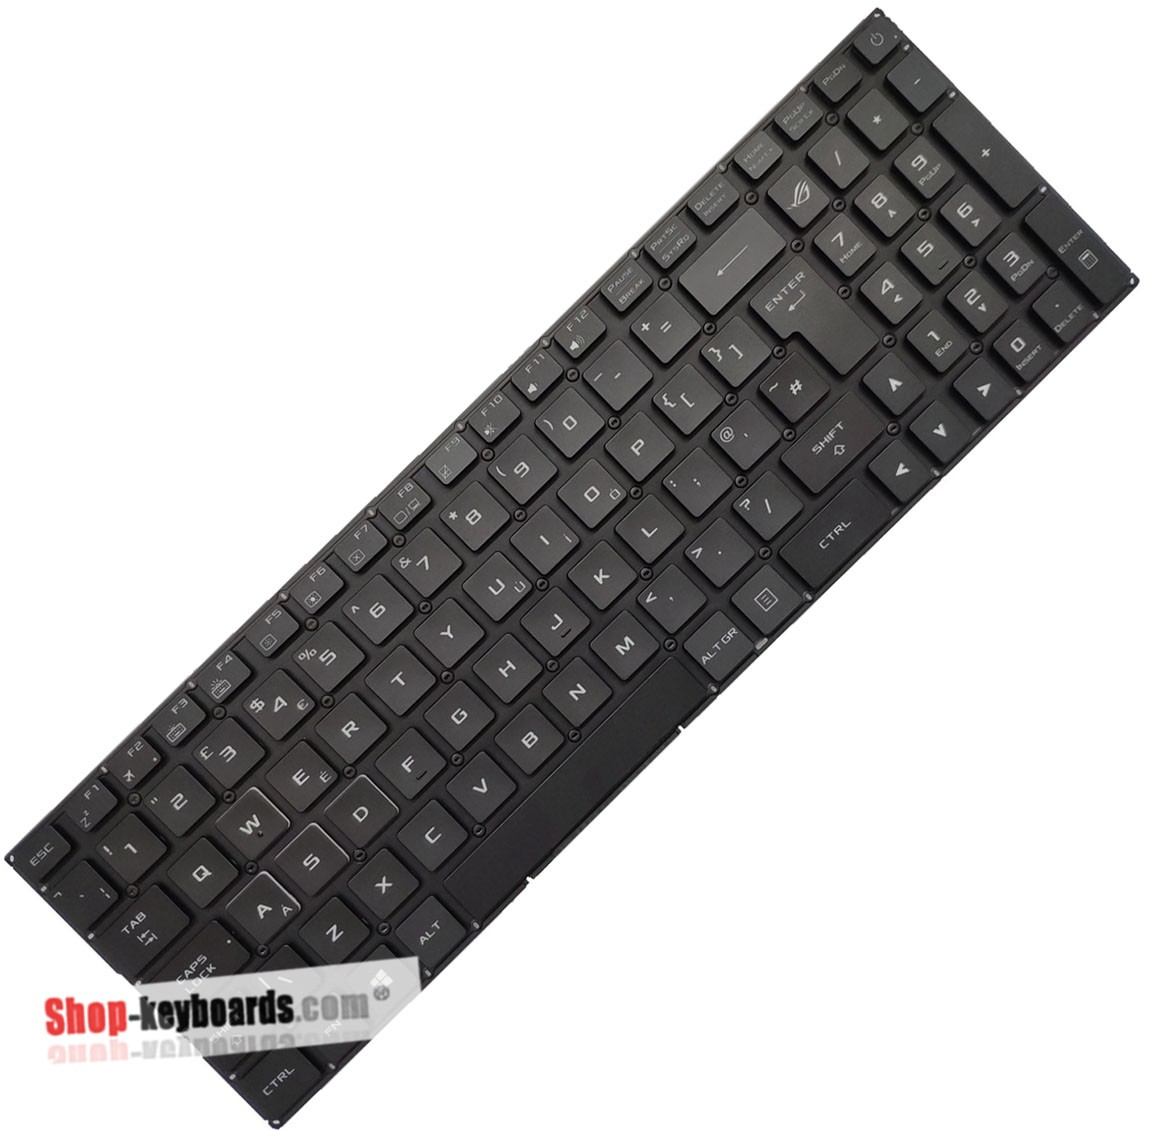 Asus 0KNB0-6612GE00 Keyboard replacement